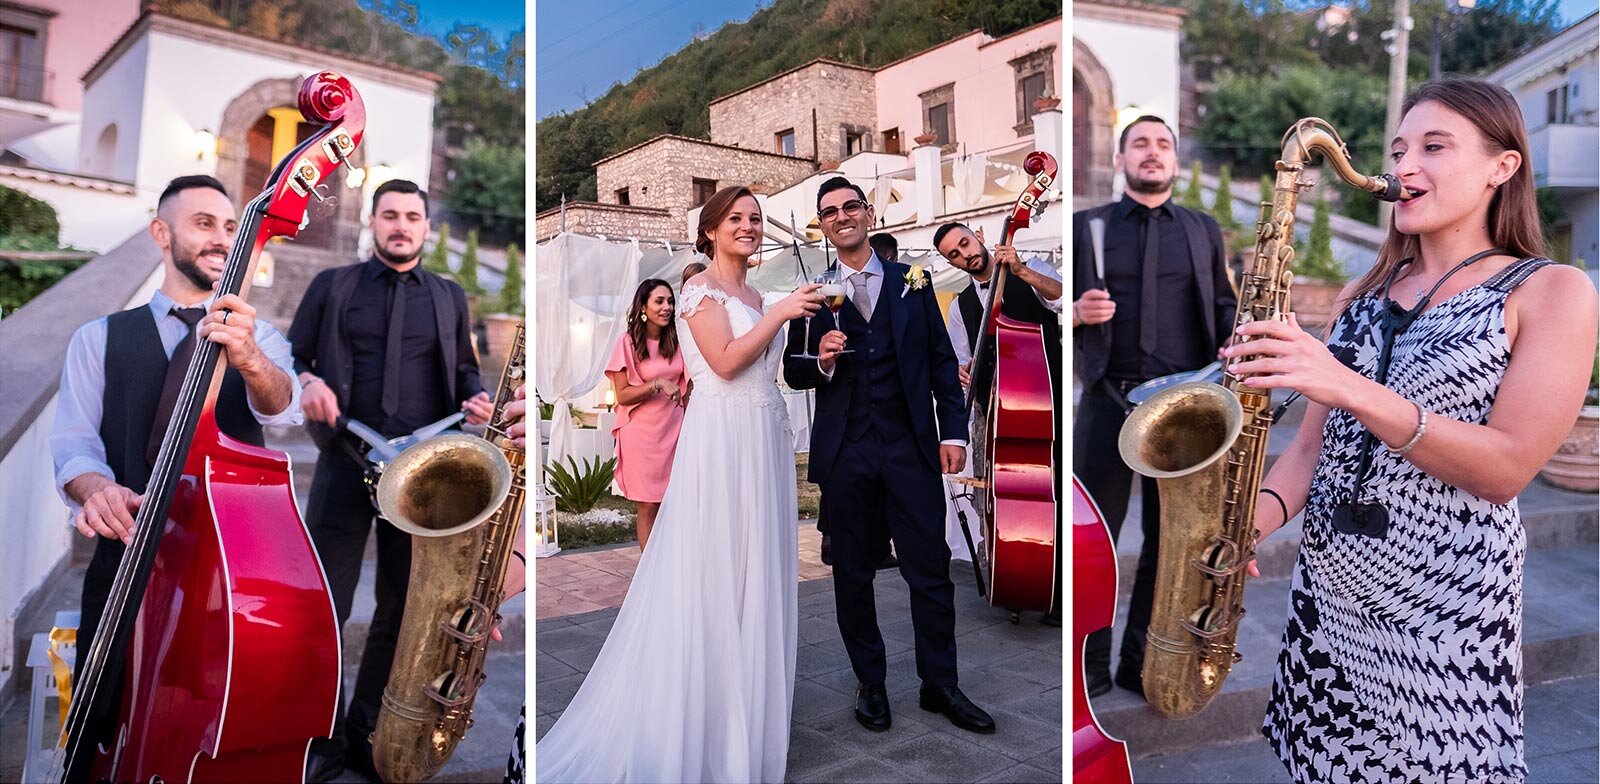 00014-Fotografo-Matrimonio-VicoEquense-fotografo-Sorrento-Napoli-Wedding-Amalfi-Coast-Photographer-VincentAiello.jpg